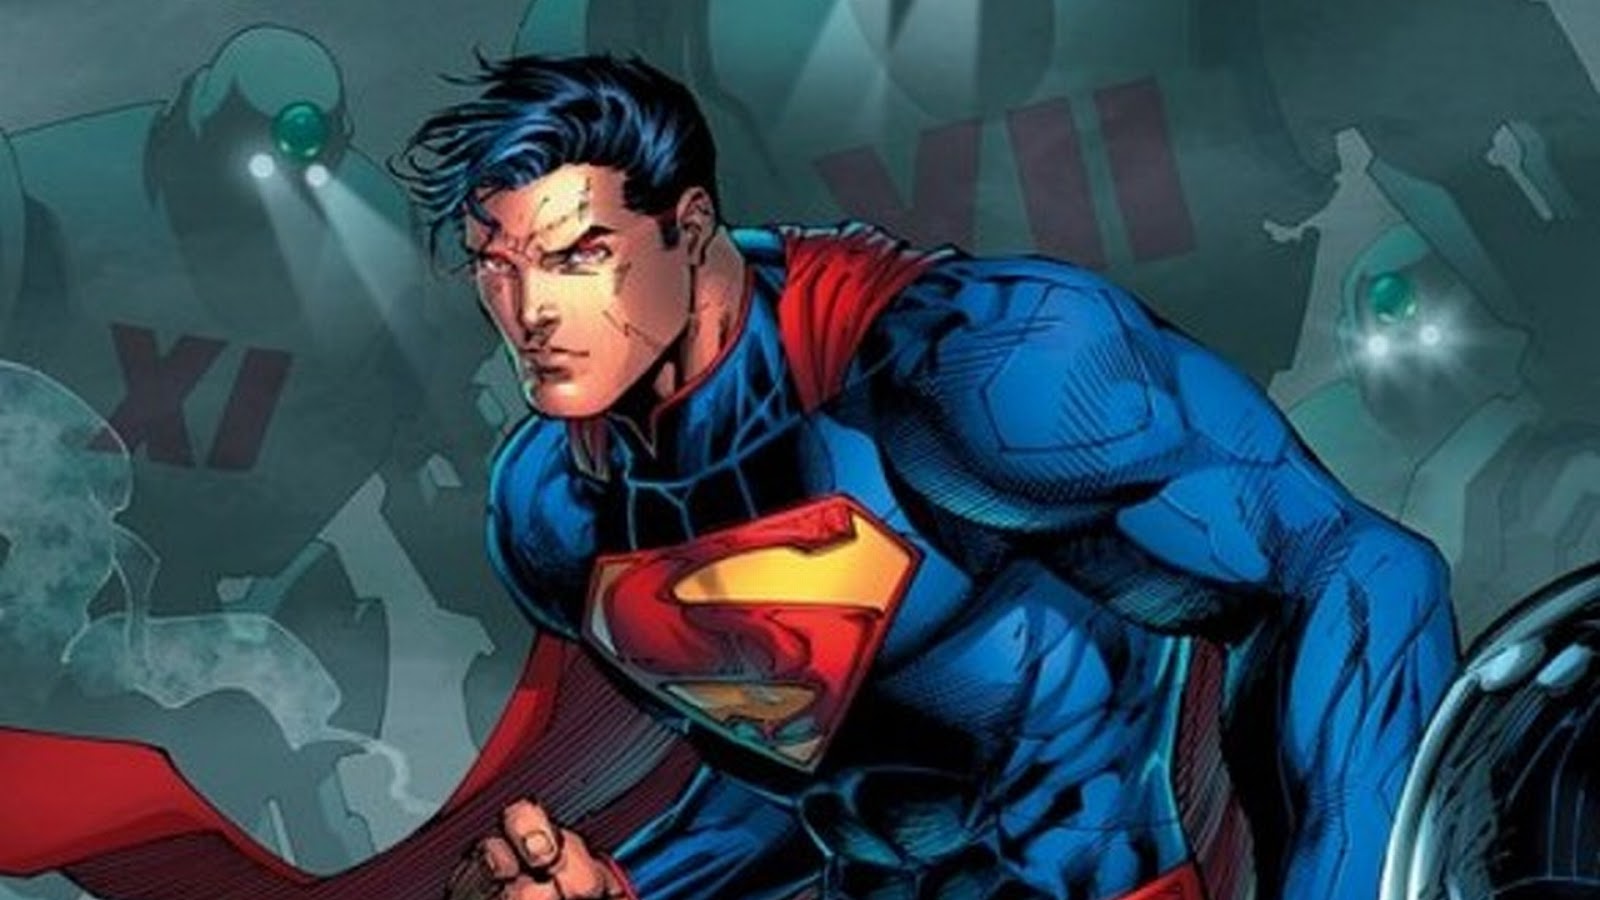 superman comic wallpaper,übermensch,superheld,erfundener charakter,fiktion,held